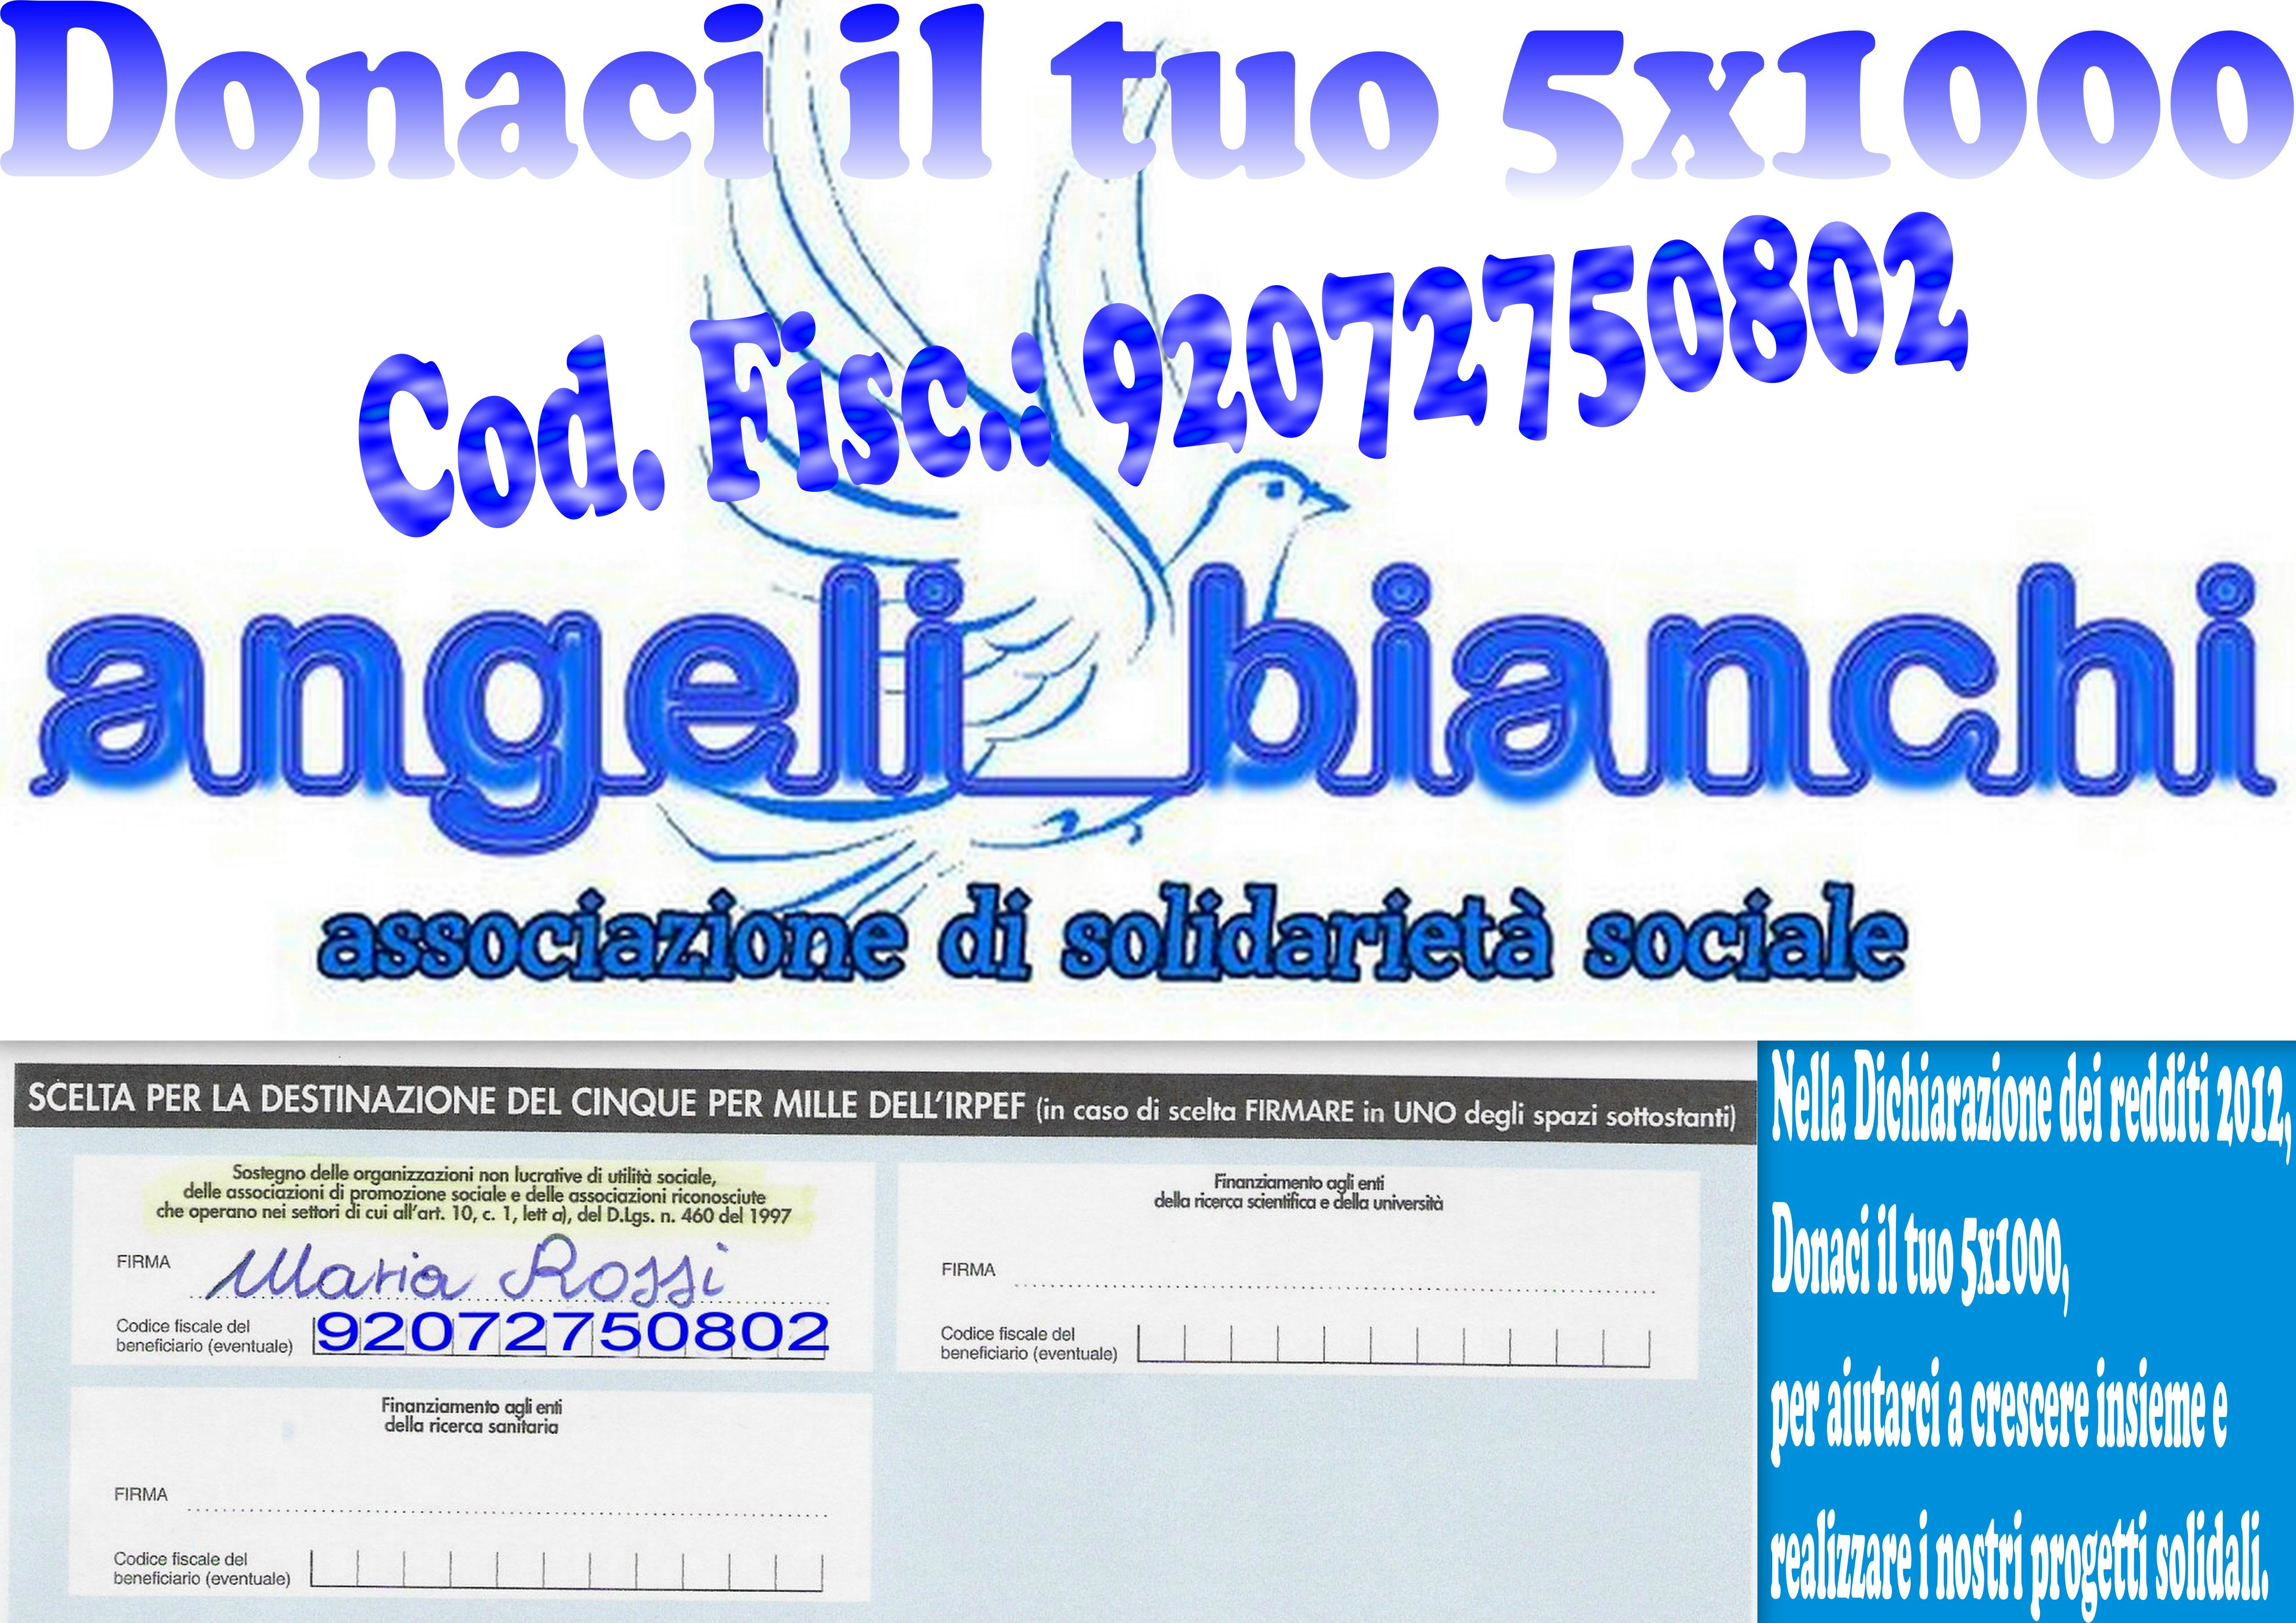 5x1000 Angeli Bianchi onlus